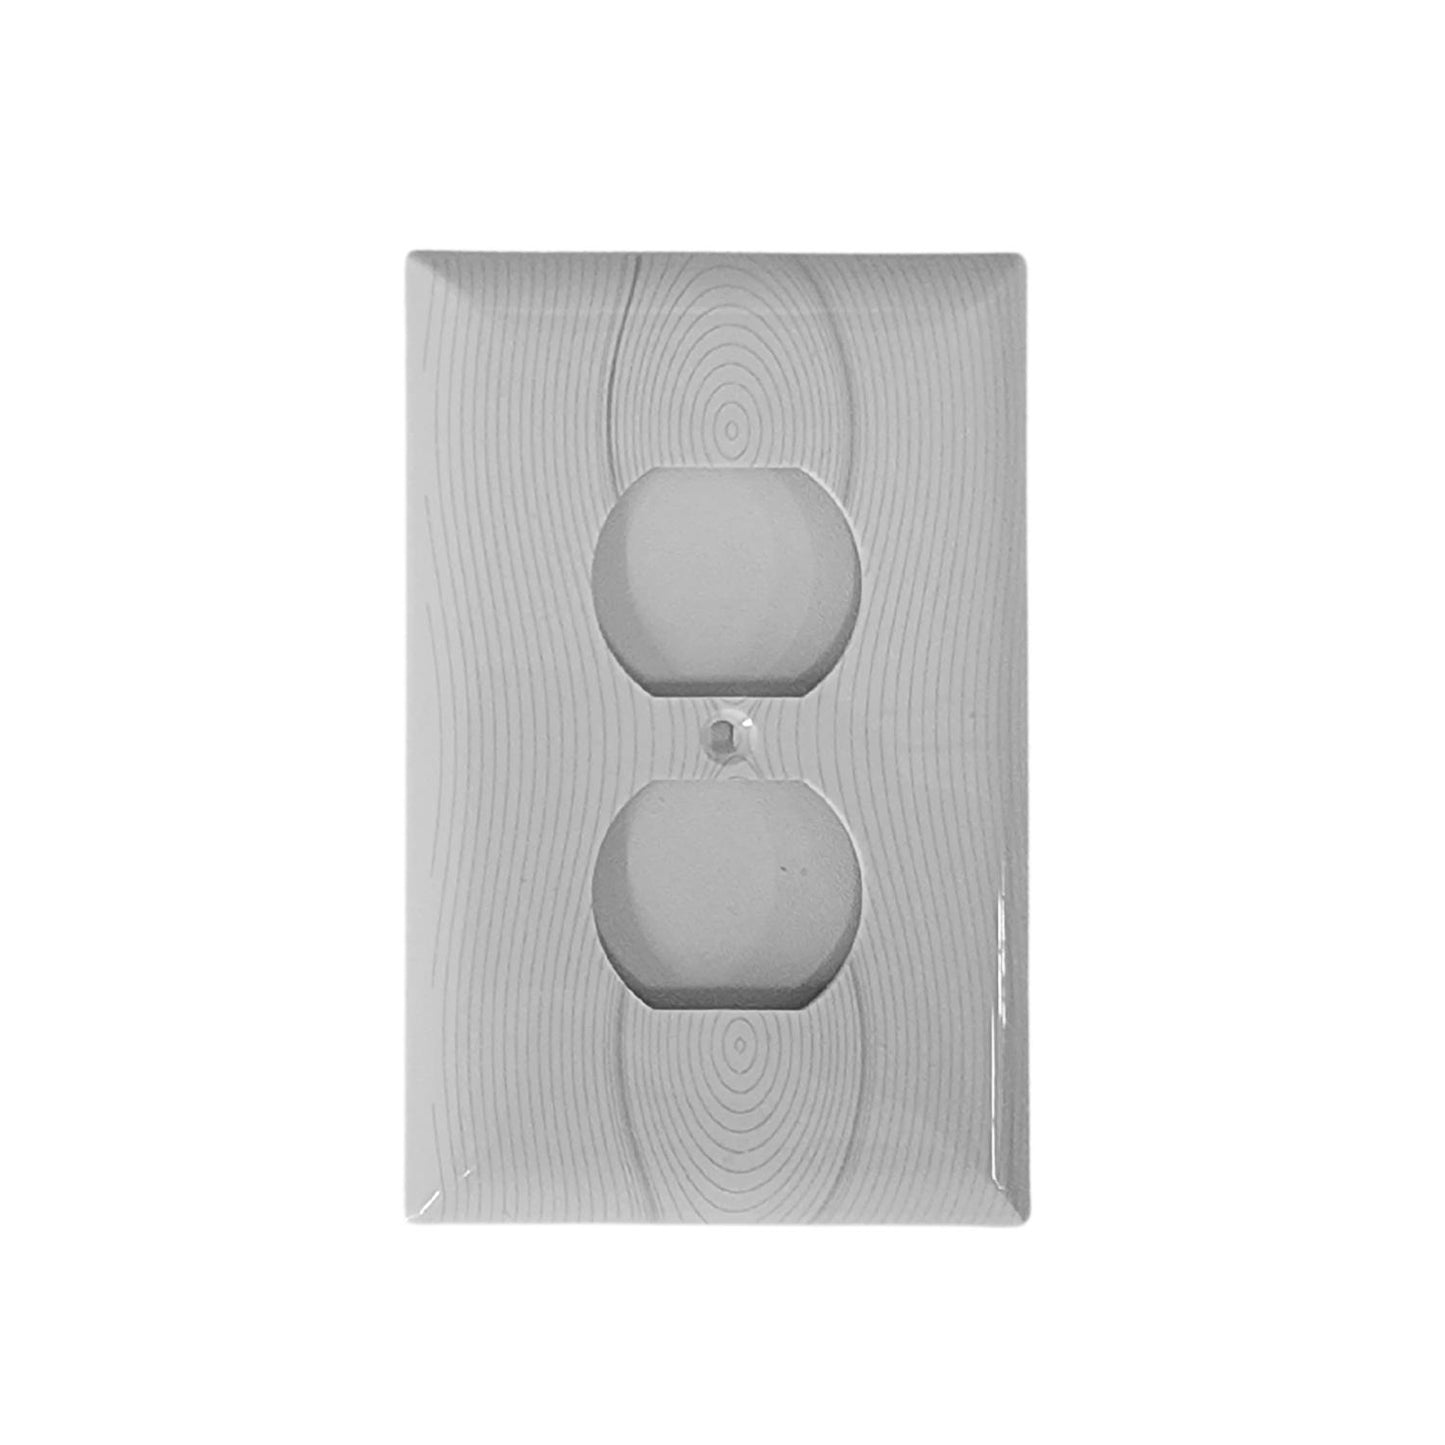 Geometric Design Single Duplex Outlet Cover Wall Plate White LA144-PWP9